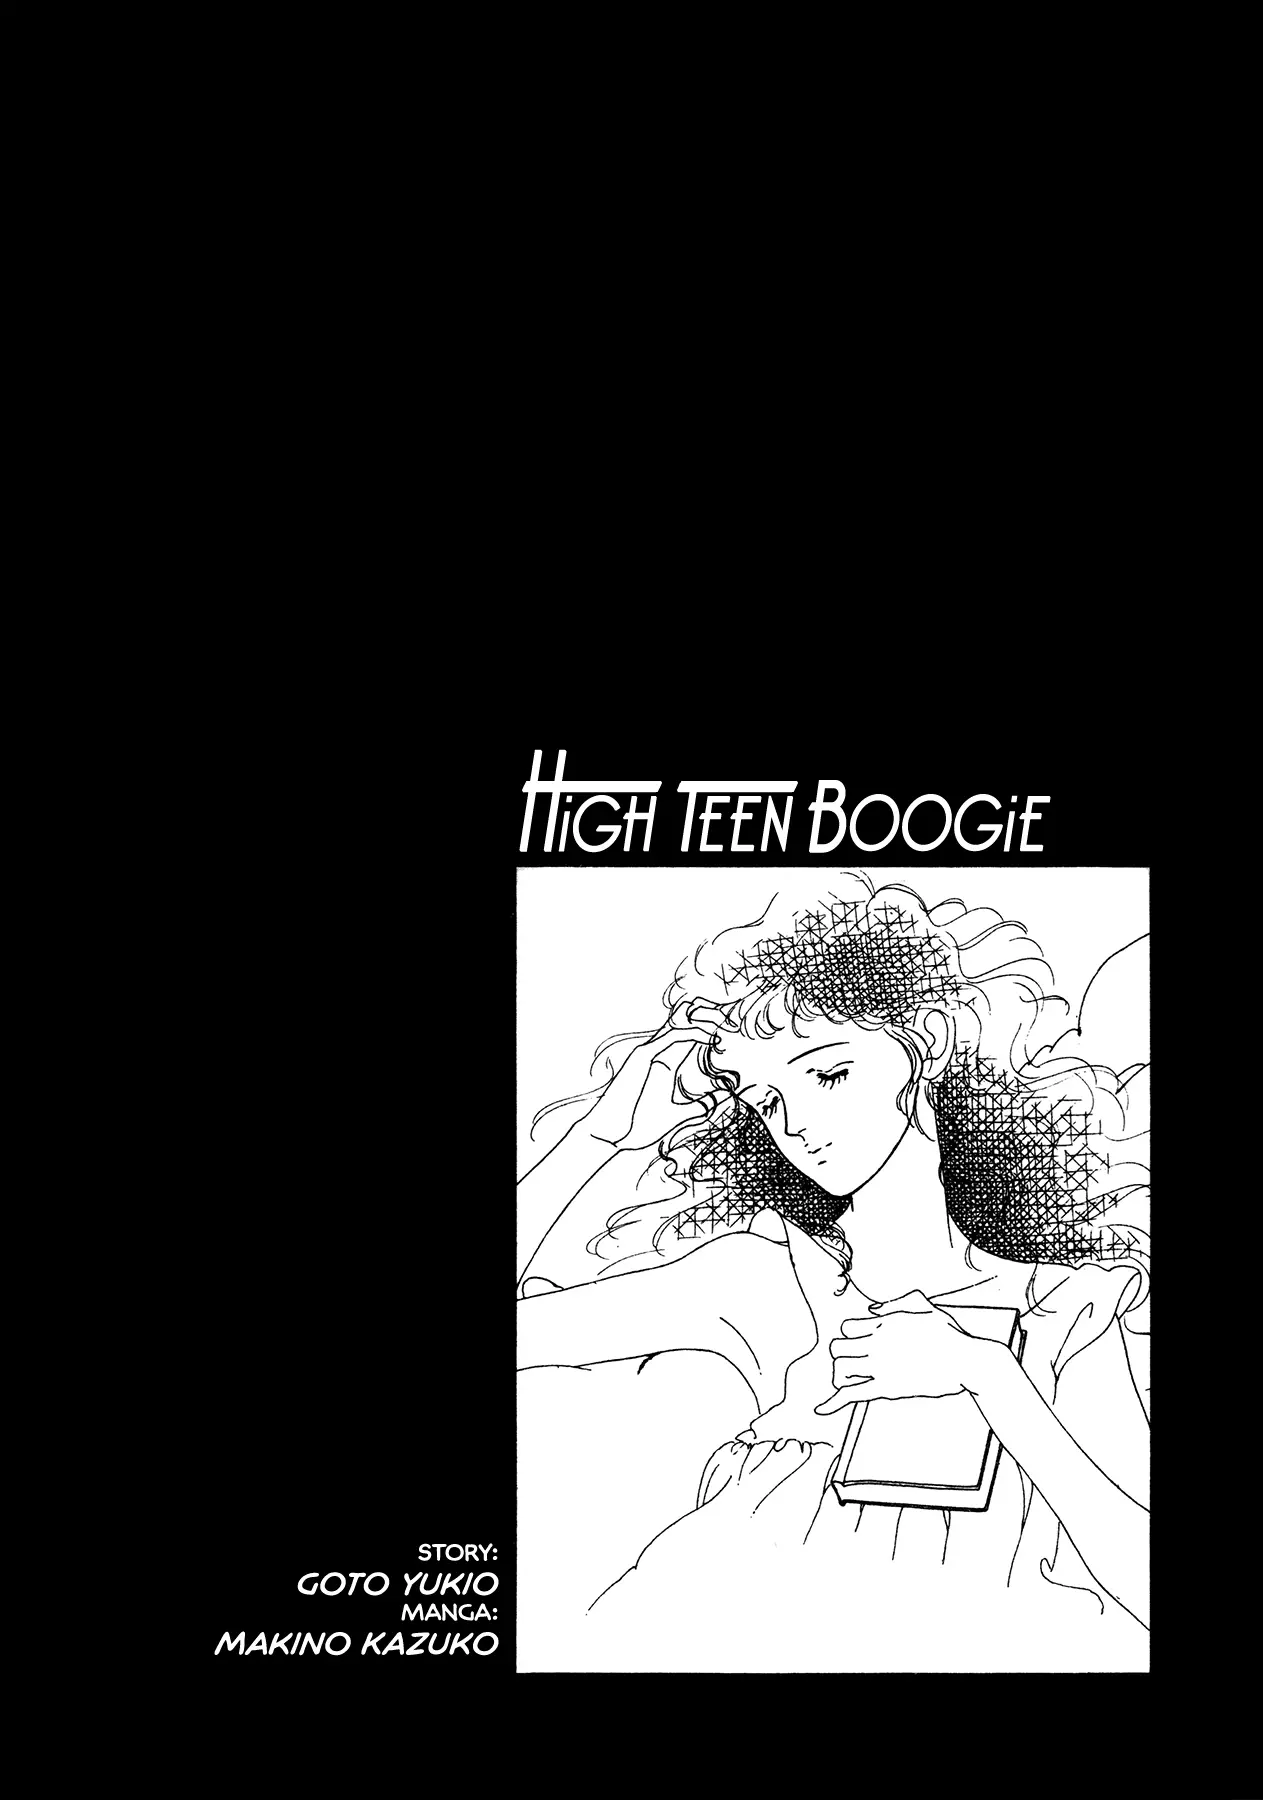 High Teen Boogie - 60 page 6-fee500e0